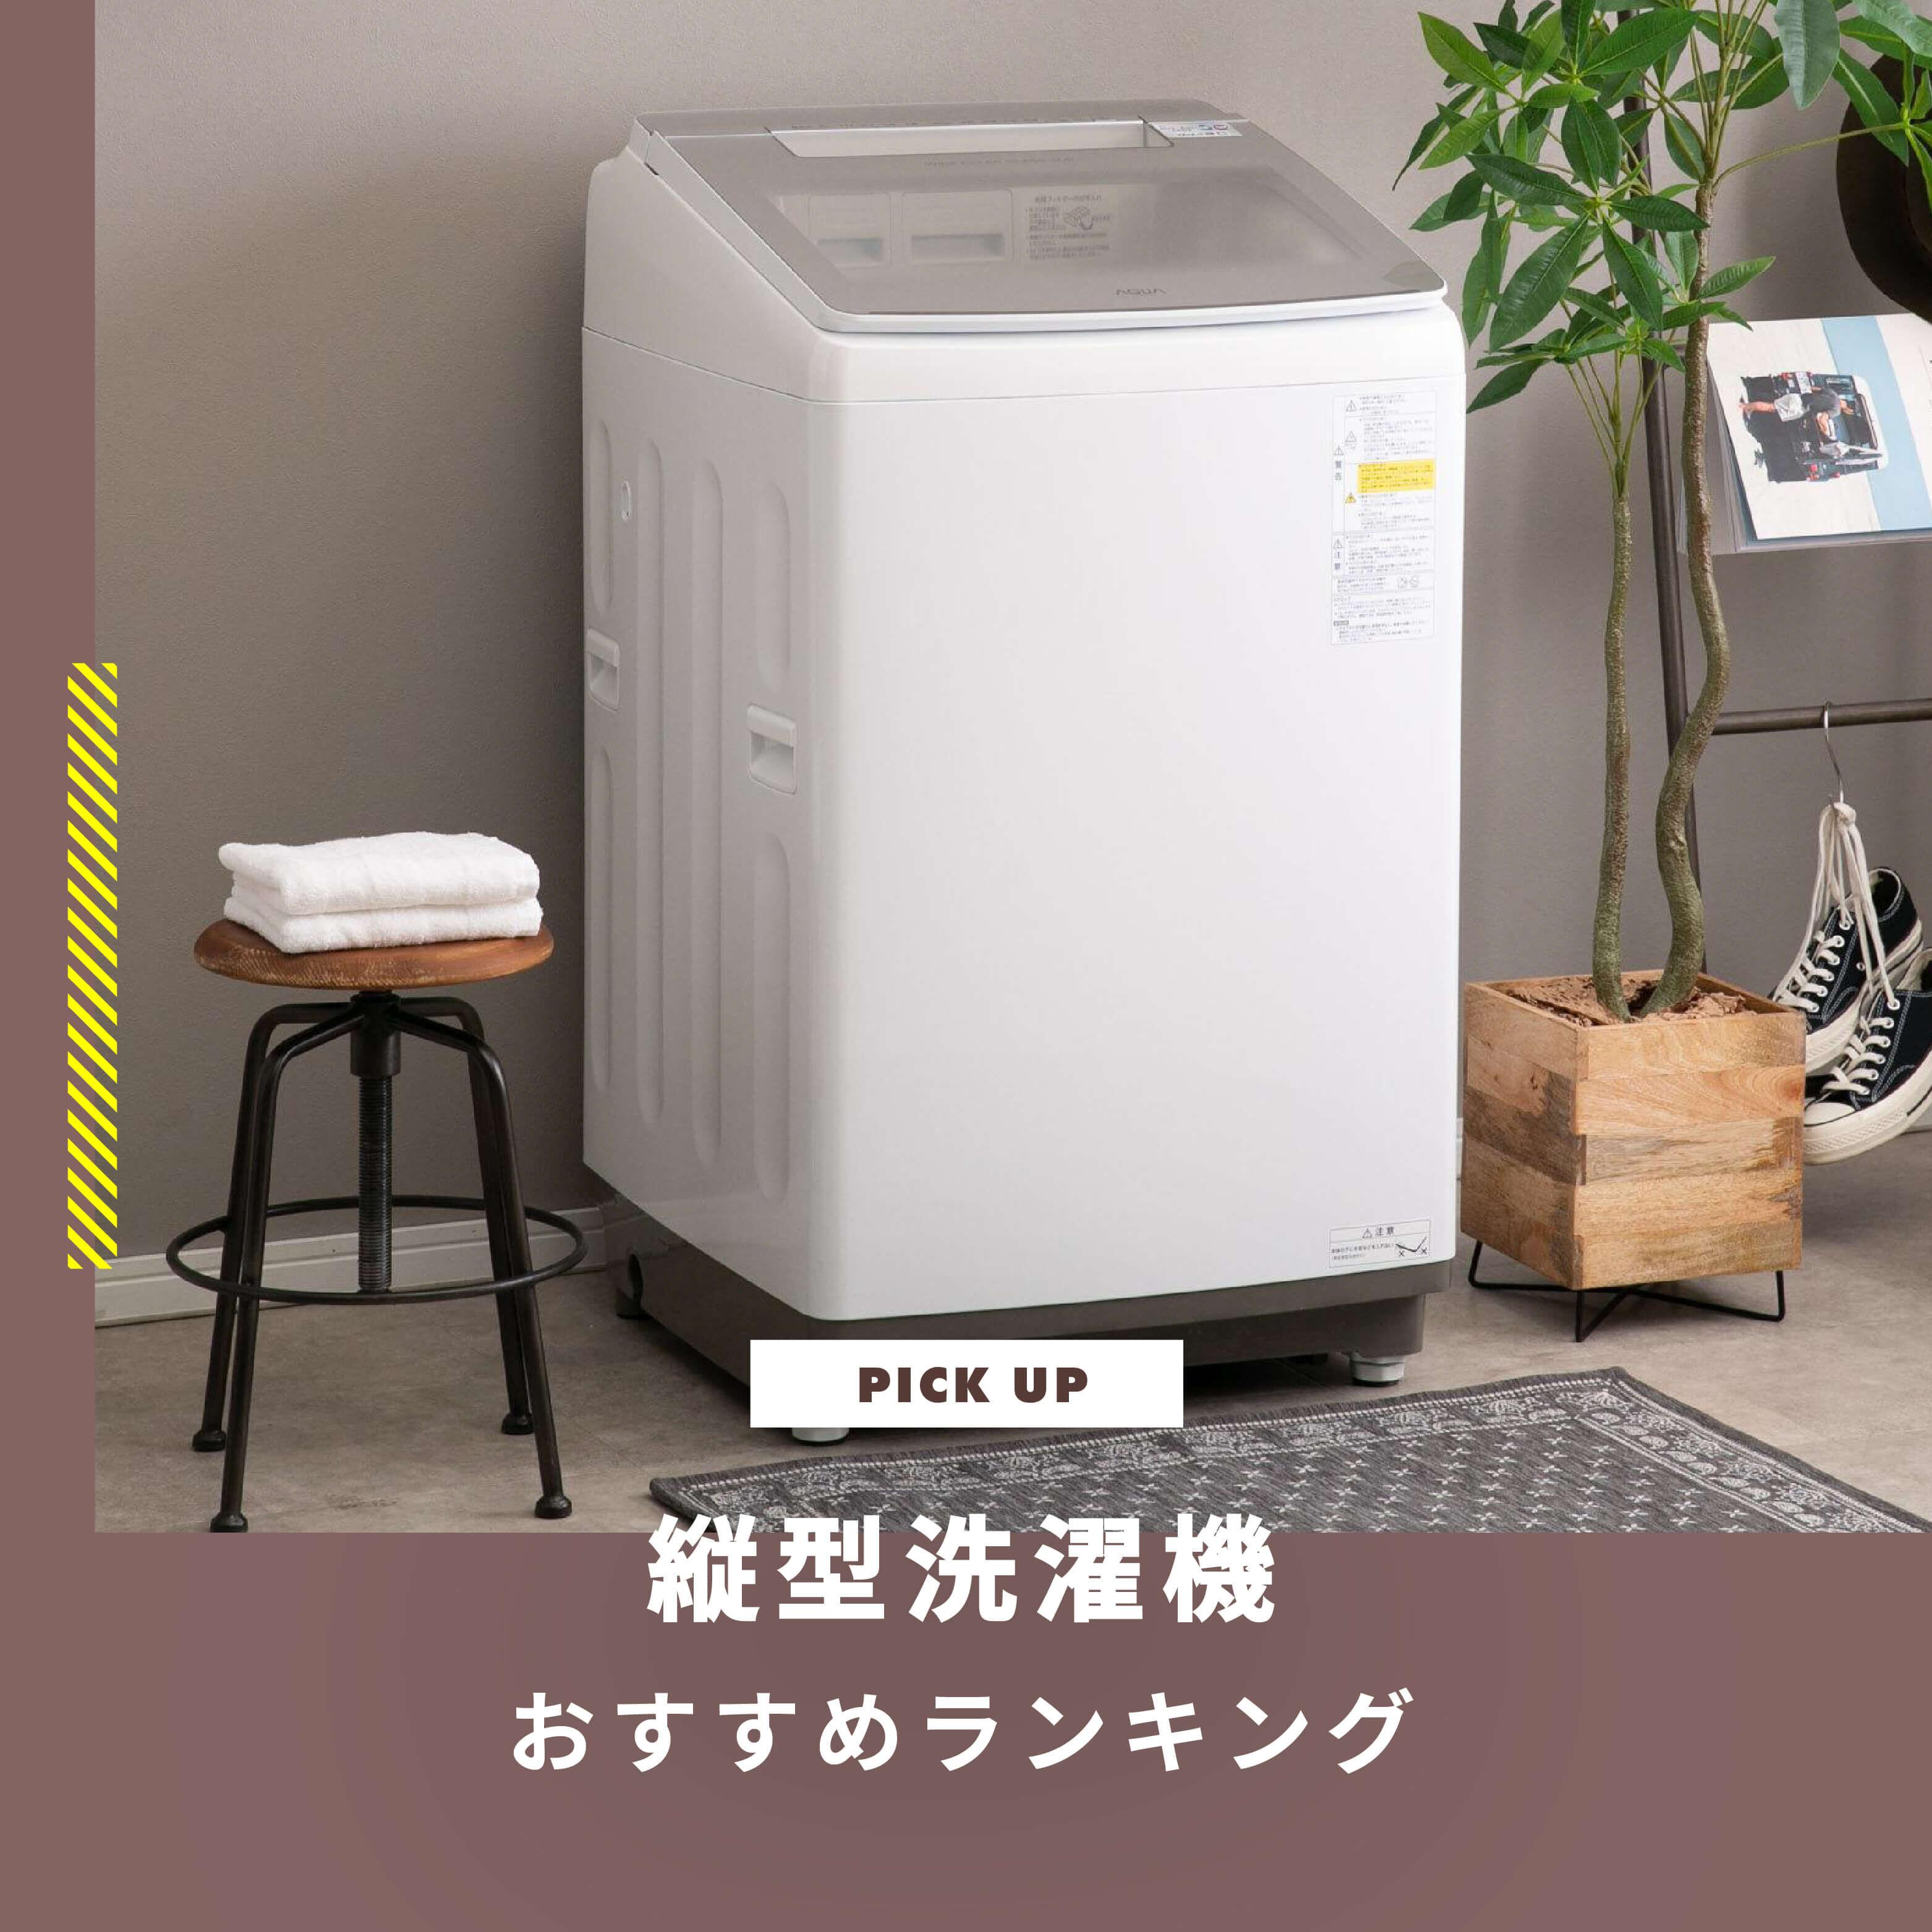 maxzen 6.0kg 洗濯機 おしゃれデザイン【地域限定配送無料】